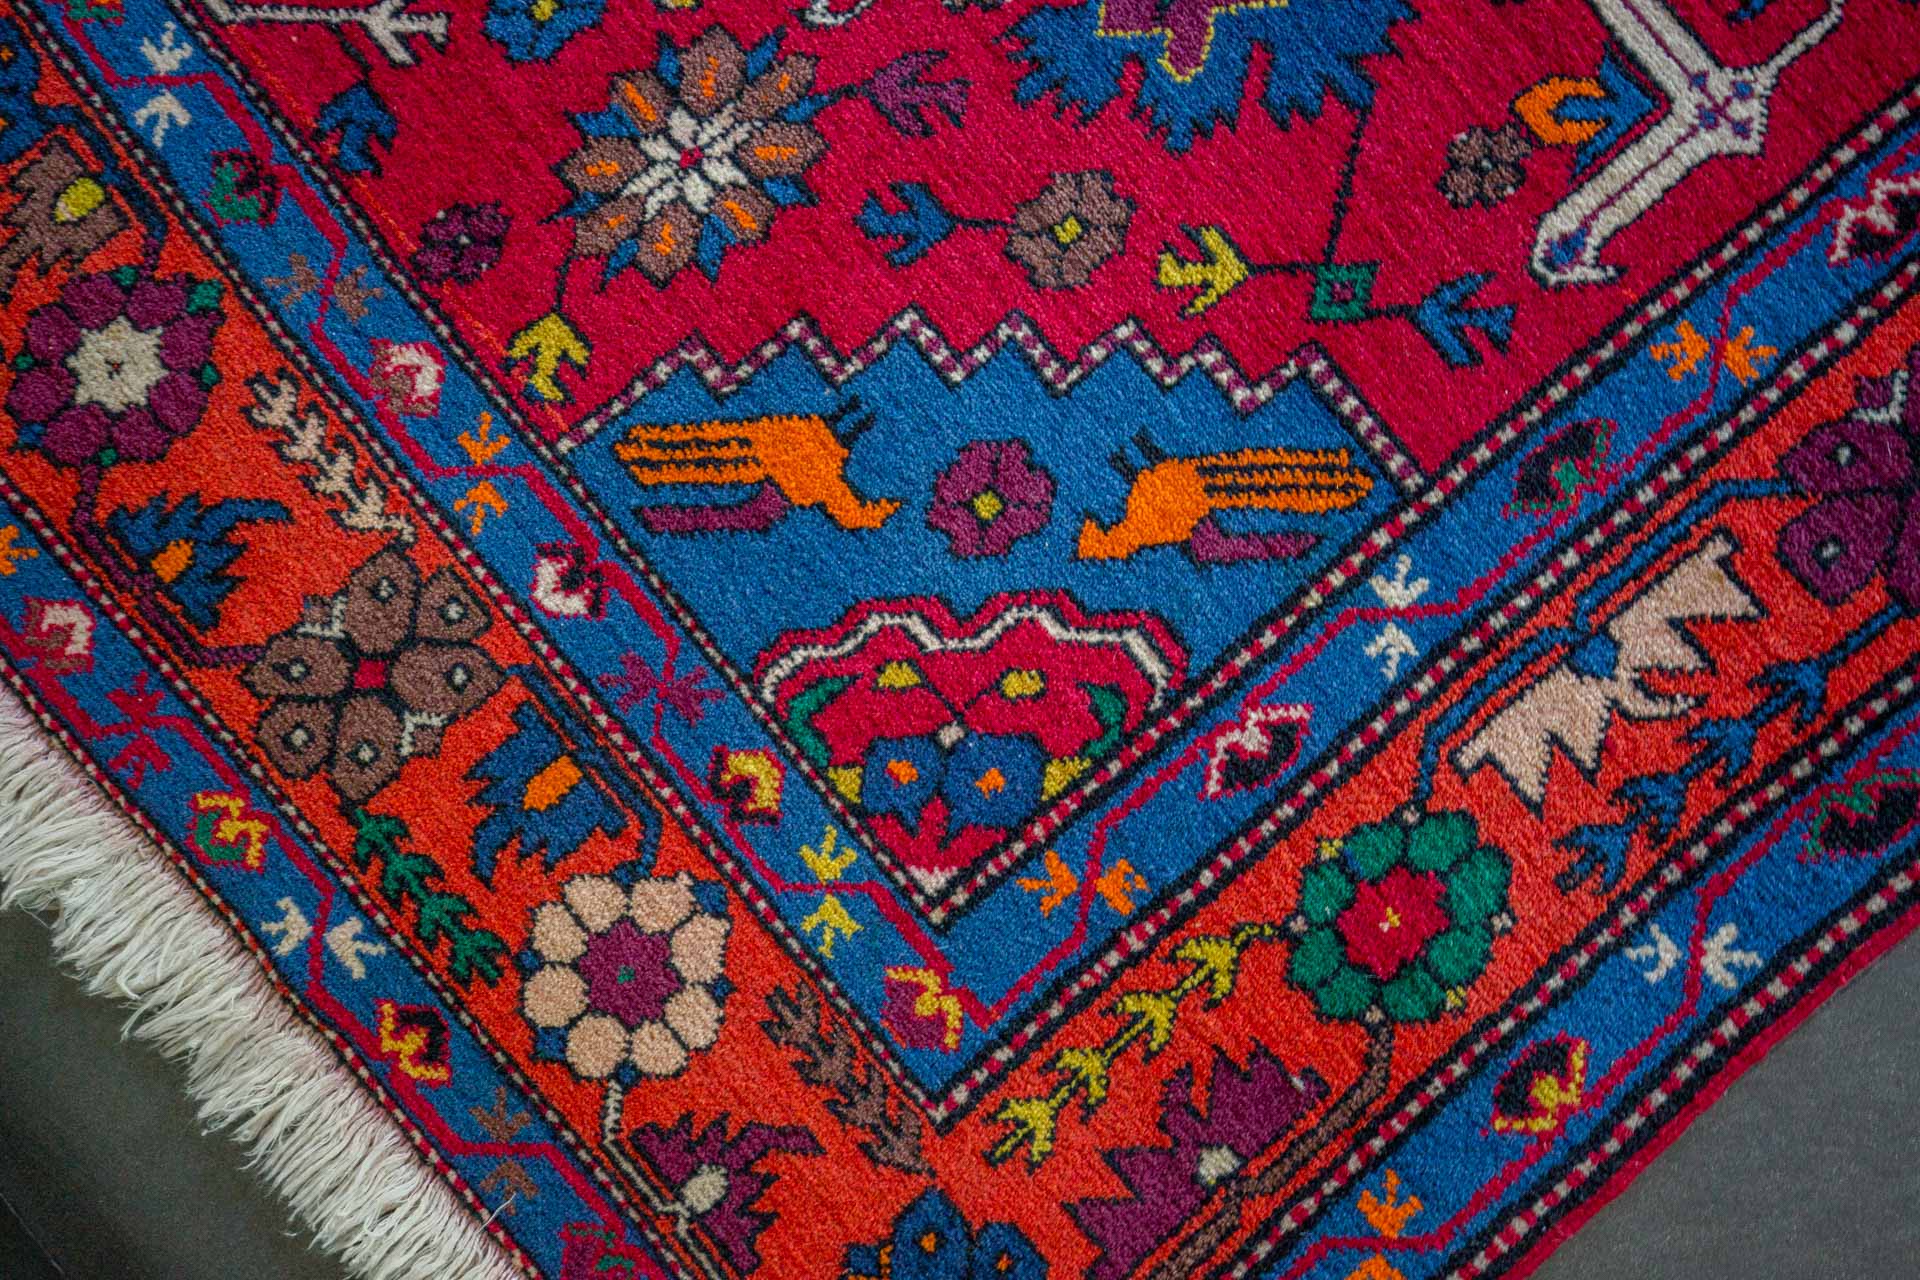 Nice Caucasian Shirvan rug size 4x5.9 circa 1900 Price $900